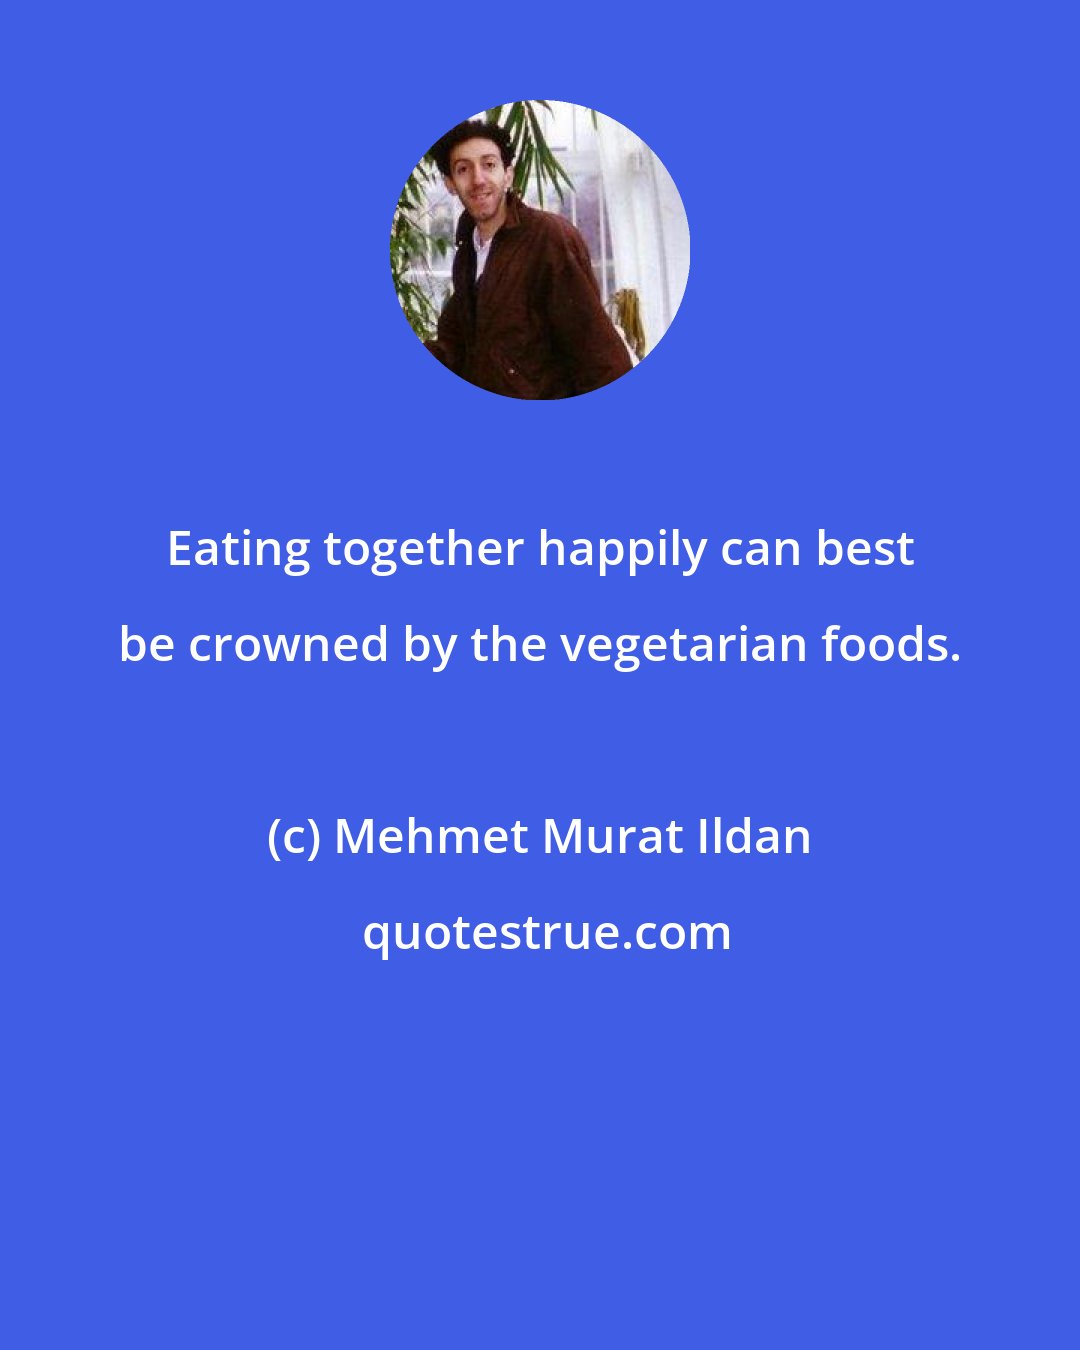 Mehmet Murat Ildan: Eating together happily can best be crowned by the vegetarian foods.